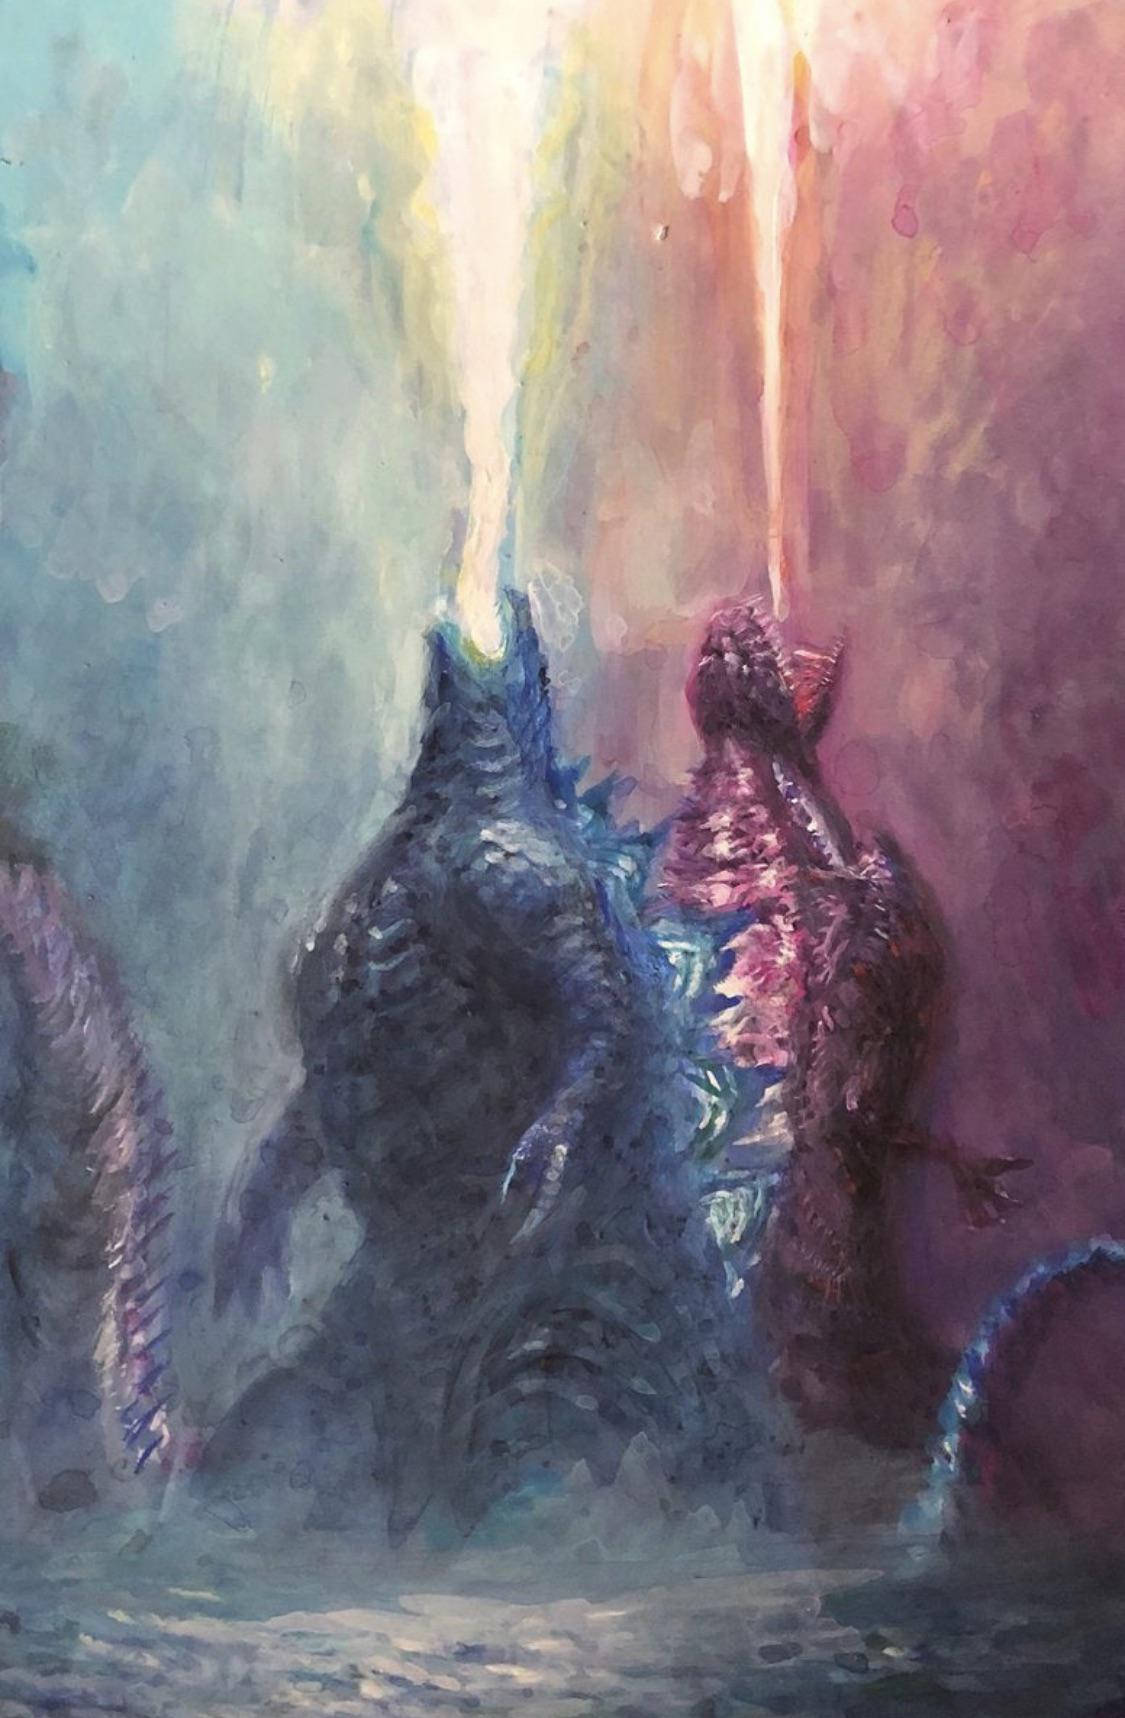 Fire Breathing Godzilla Background